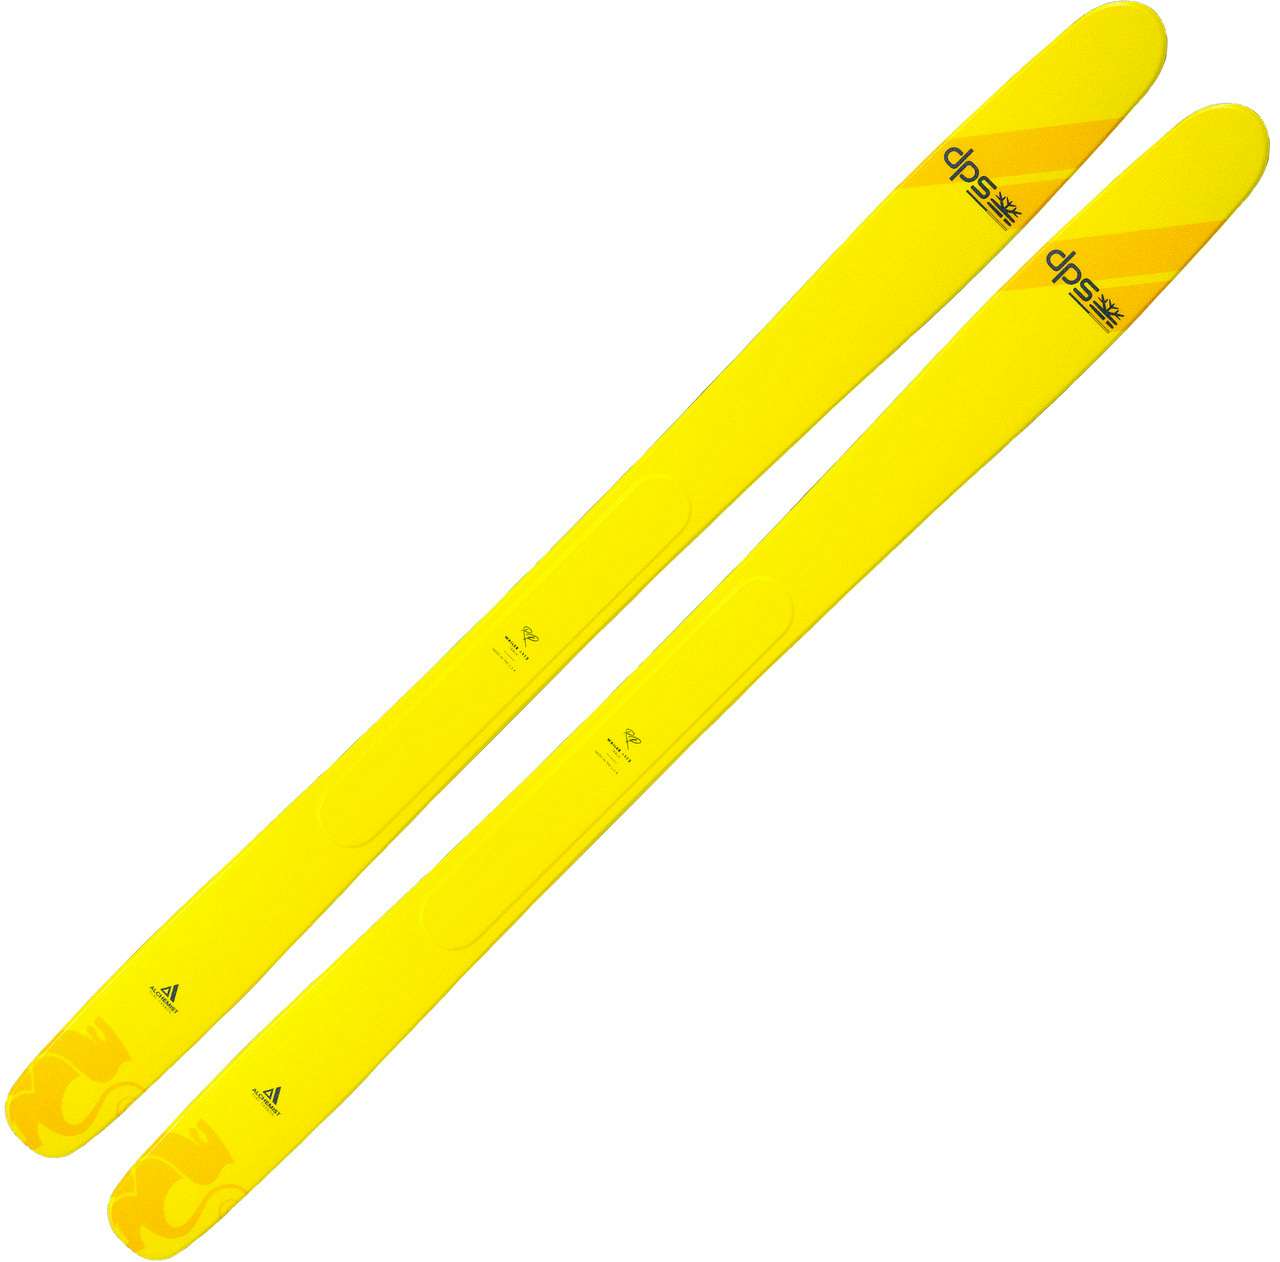 Wailer A112 RP Skis Prime Yellow